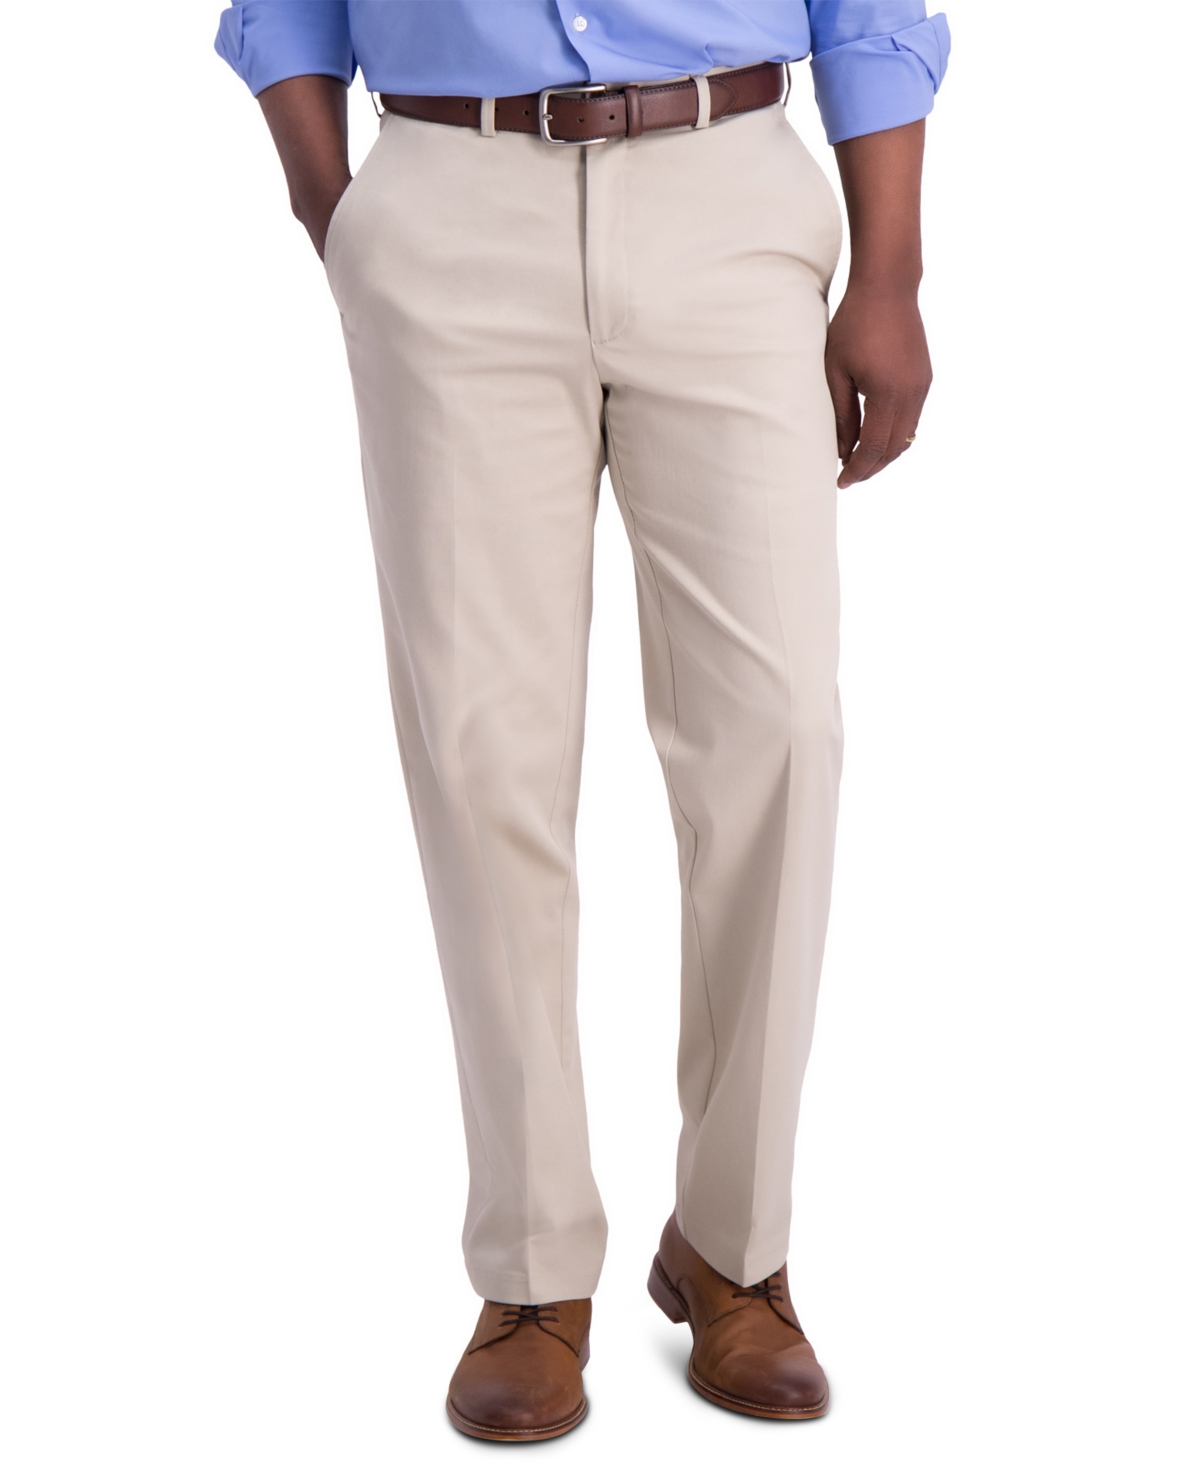 Men's Iron Free Premium Khaki Classic-Fit Flat-Front Pant - Dark Grey